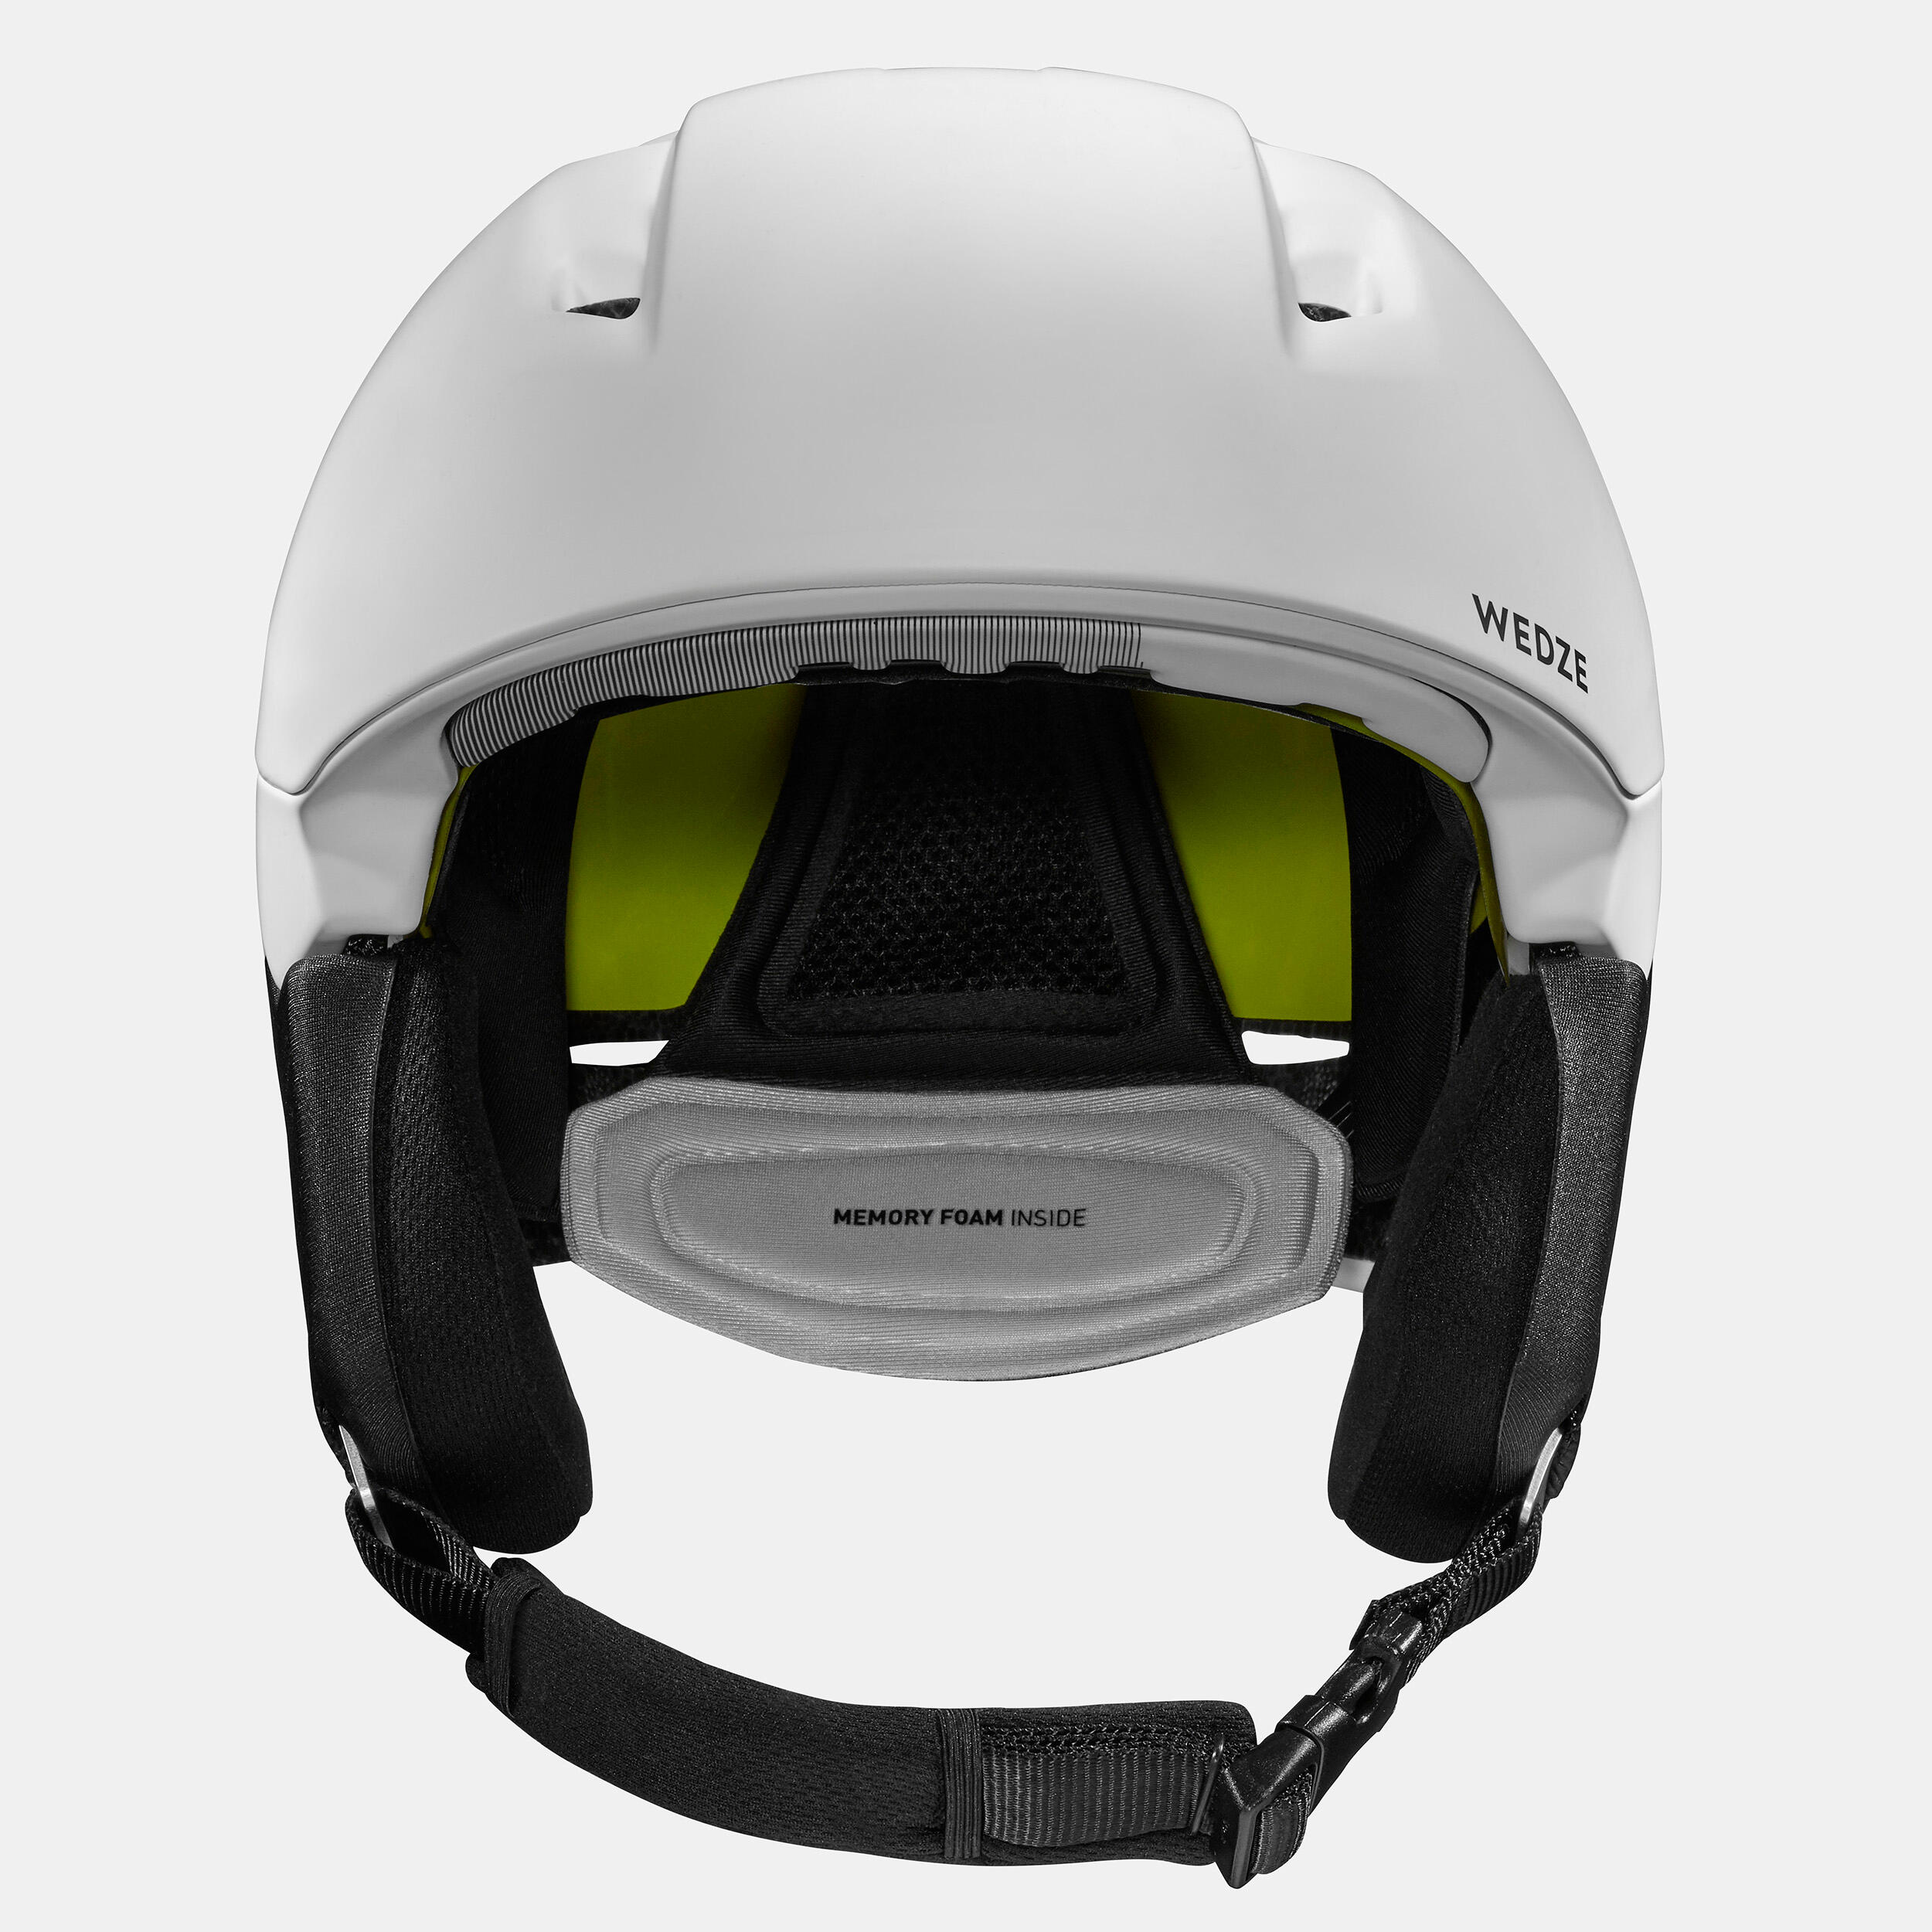 Adult ski helmet - PST 900 MIPS - white and black 4/12